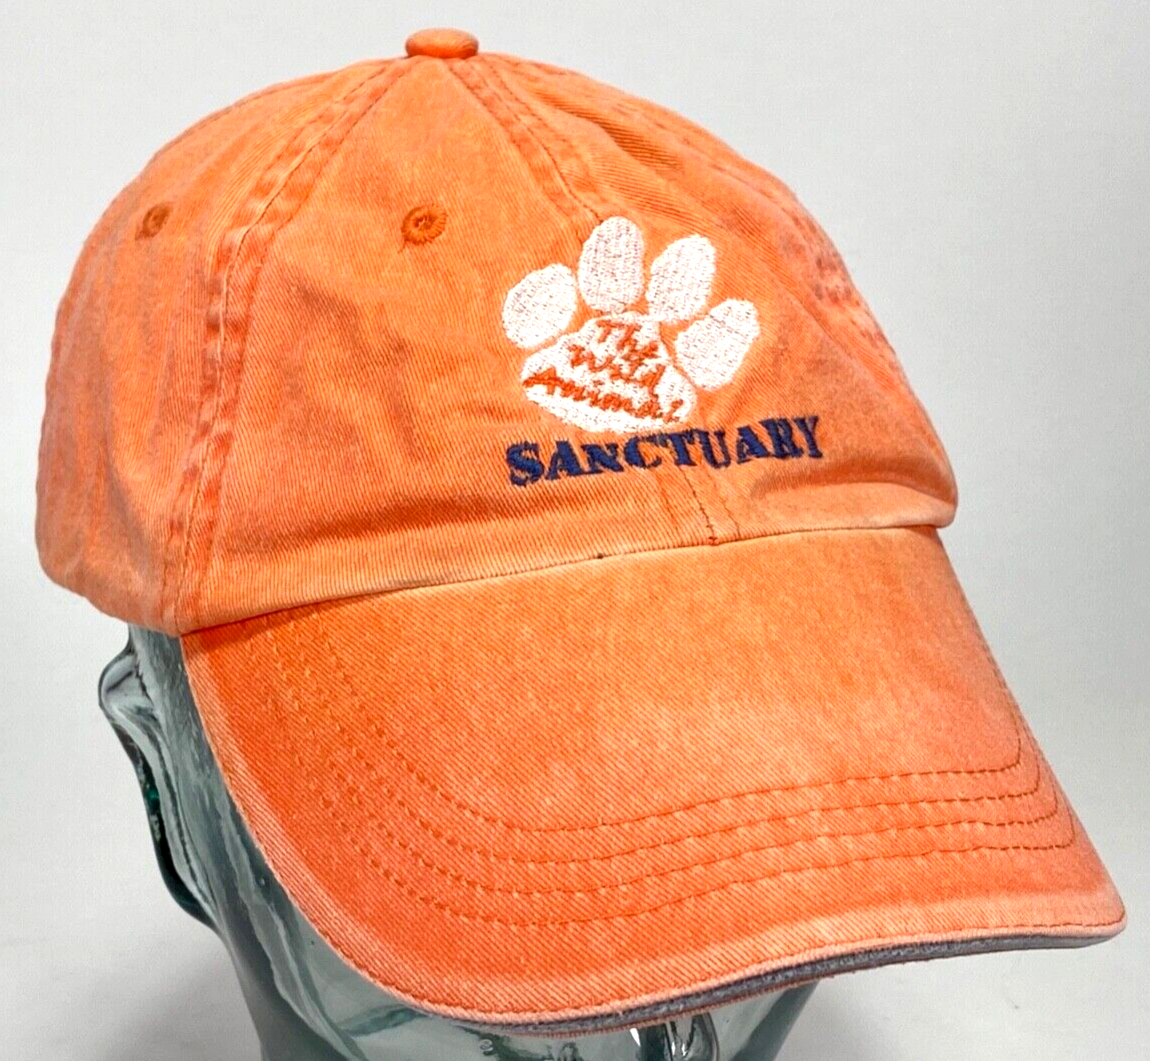 Primary image for The Wild Animal Sanctuary Hat-Colorado-Orange-Embroidered Paw Print-Anvil Cap